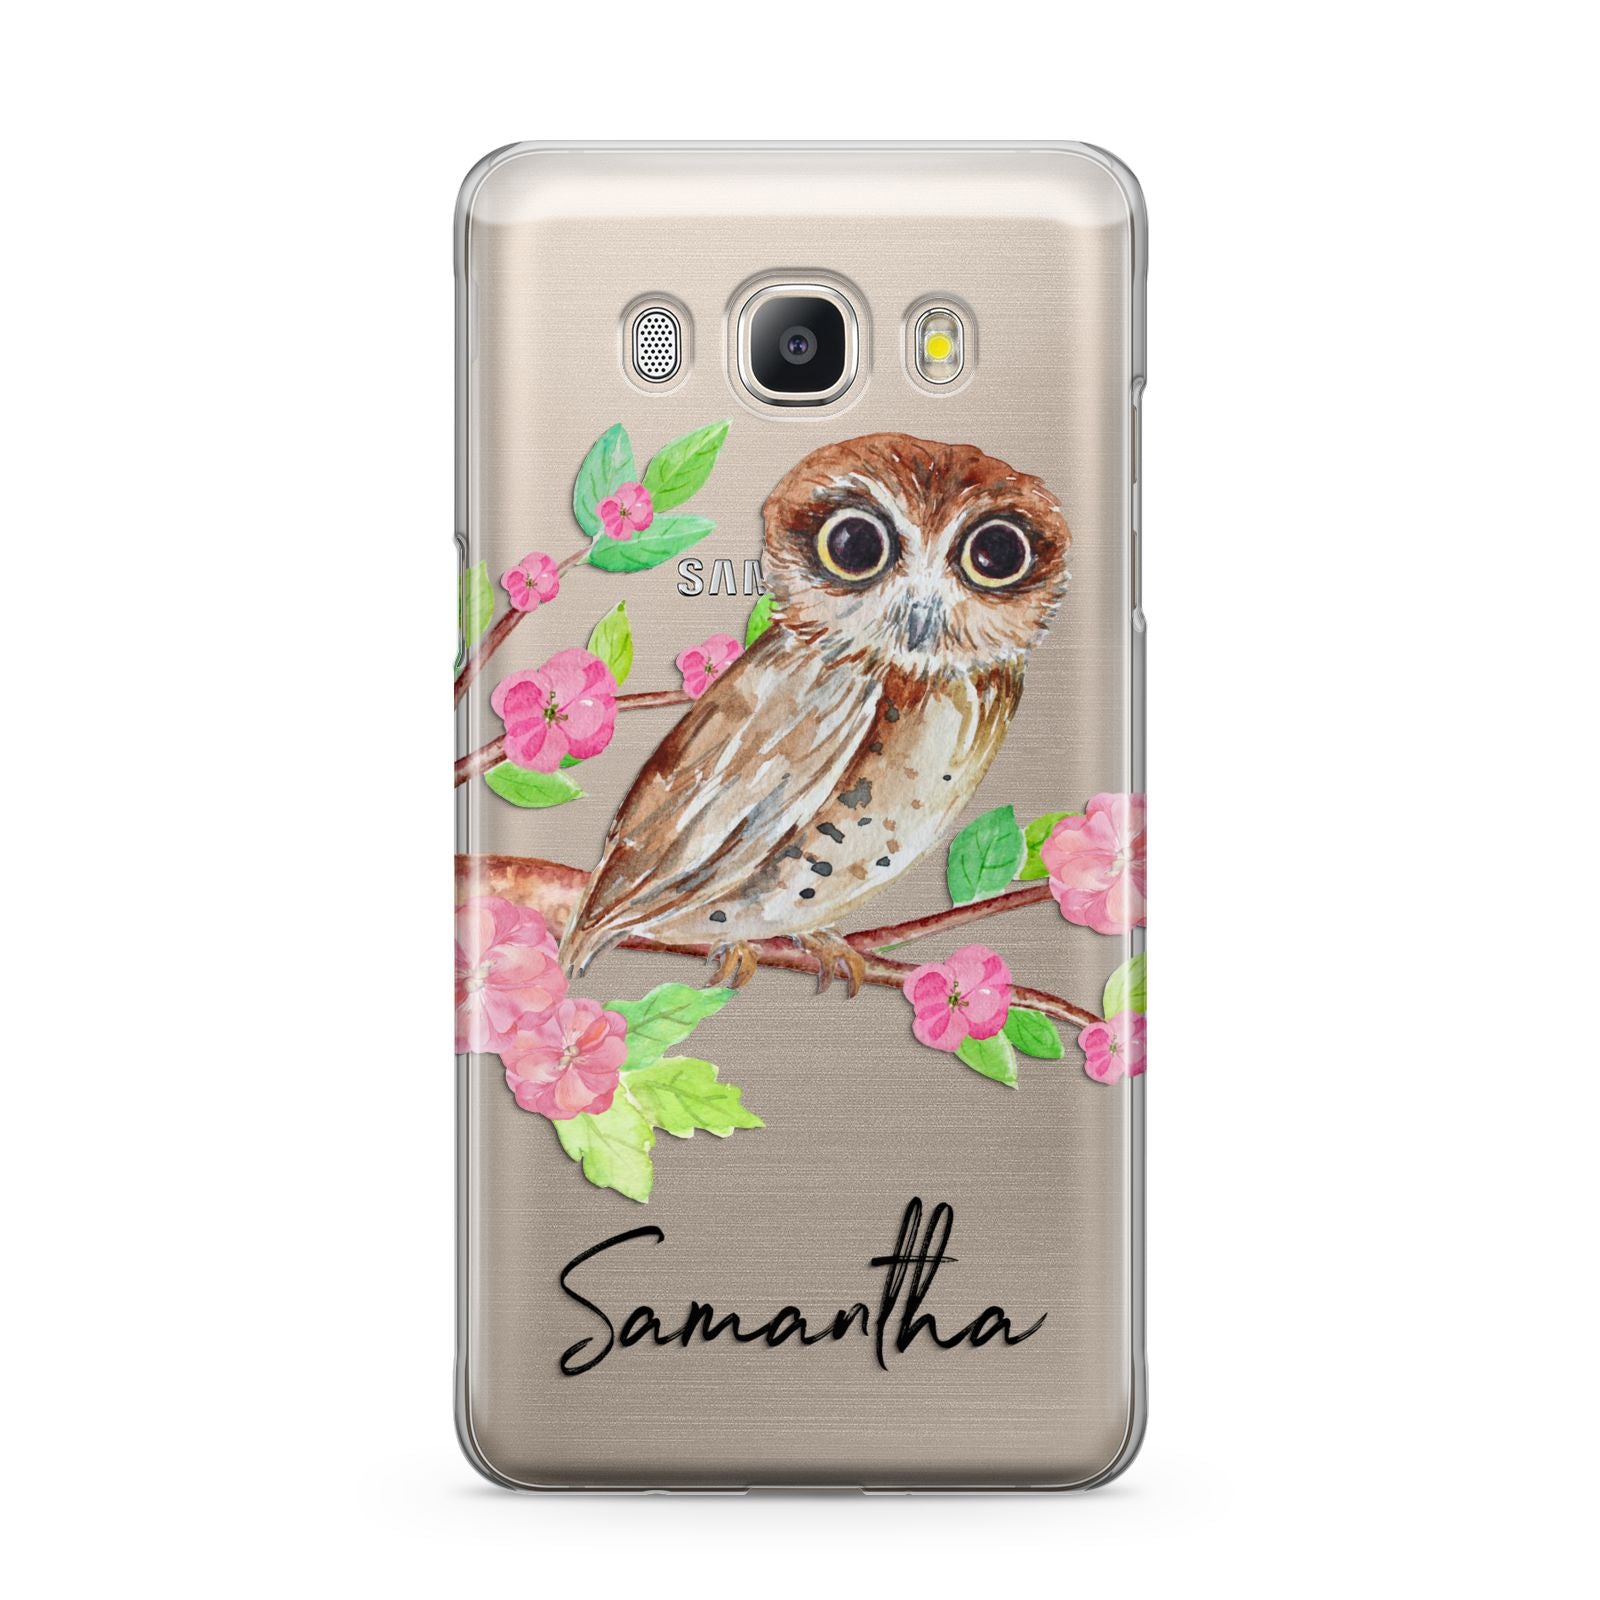 Personalised Owl Samsung Galaxy J5 2016 Case